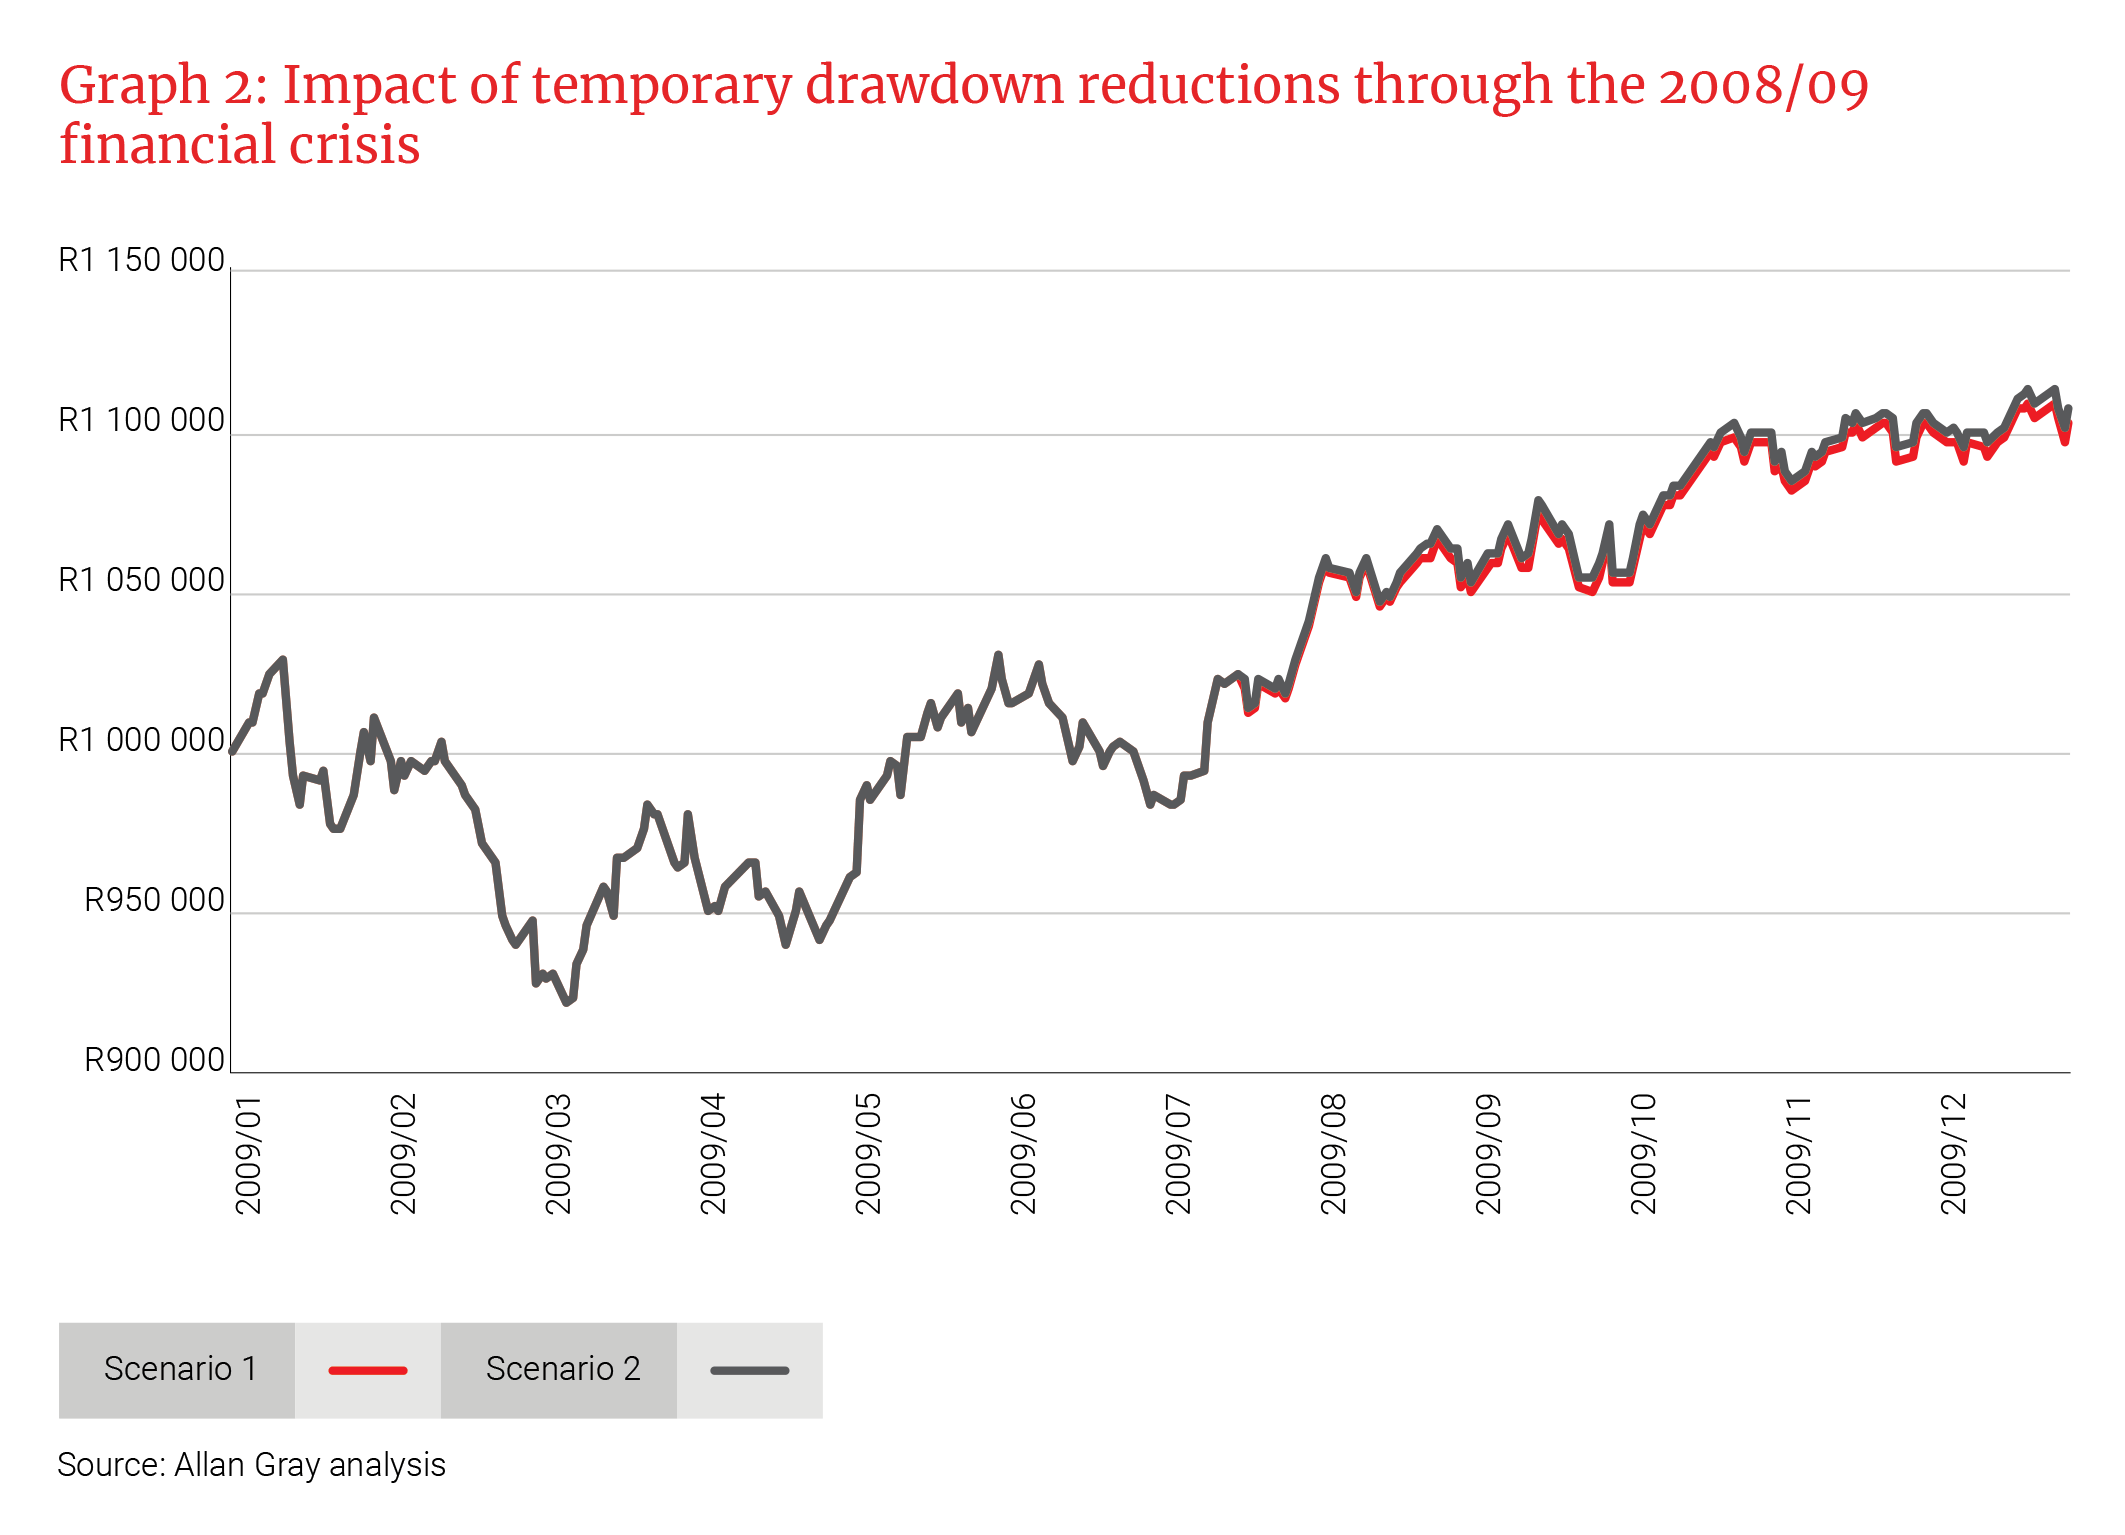 Impact of temporary drawdown reductions through the 2008/09 financial crisis - Allan Gray  